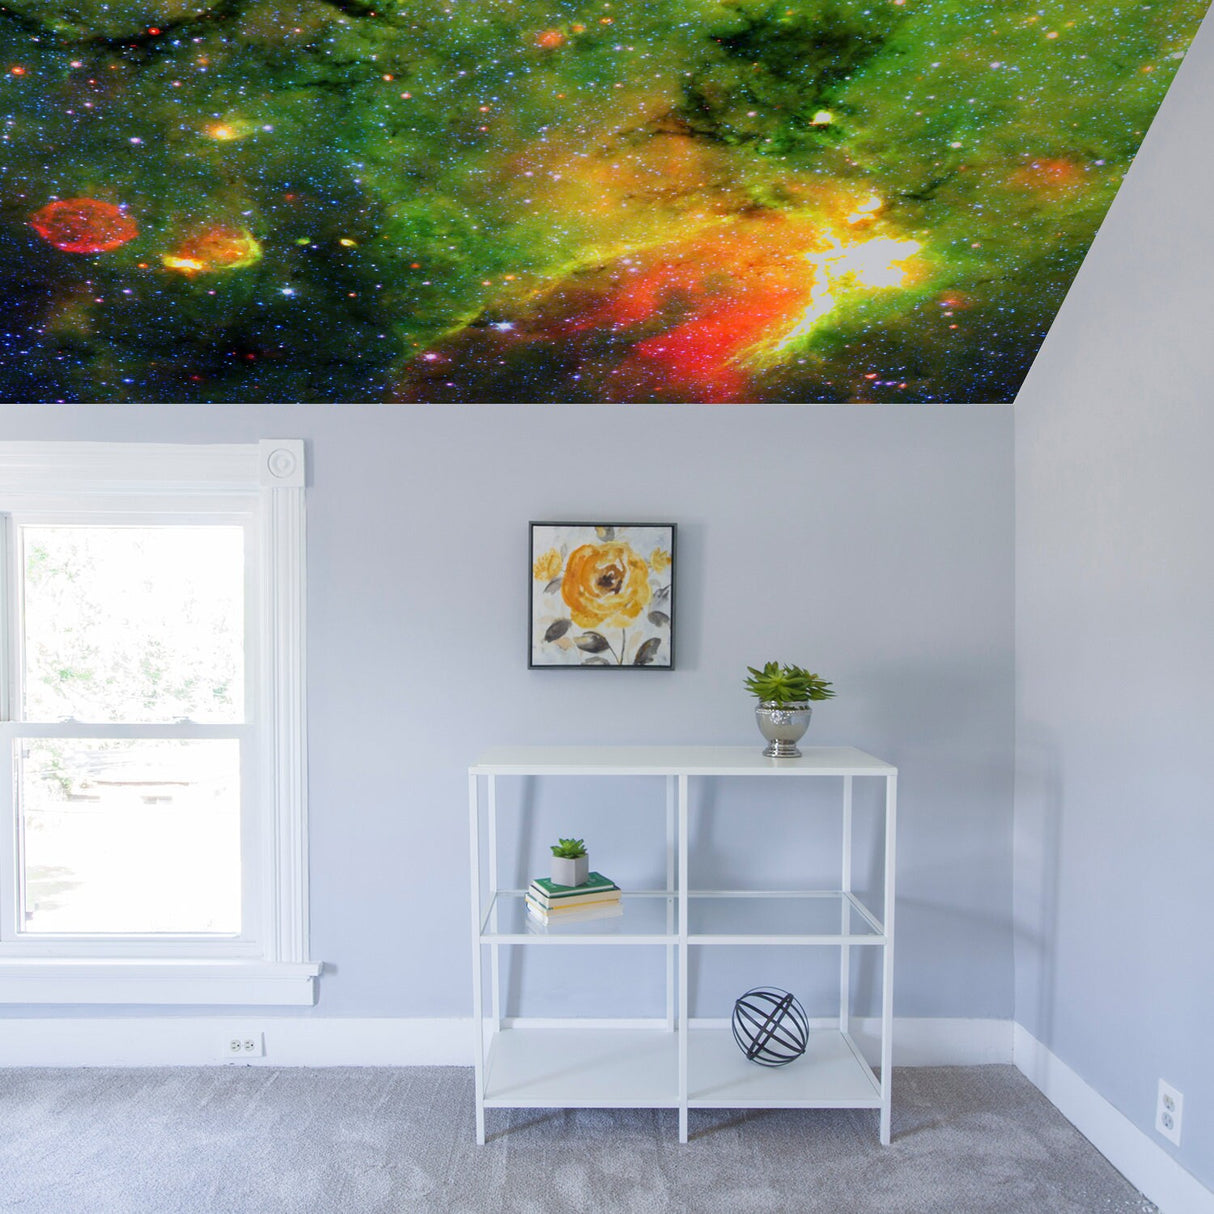 Space Theme Ceiling Vinyl Sticker - Star The Universe Galaxy Art Decor Nursery Planet Bedroom Decal